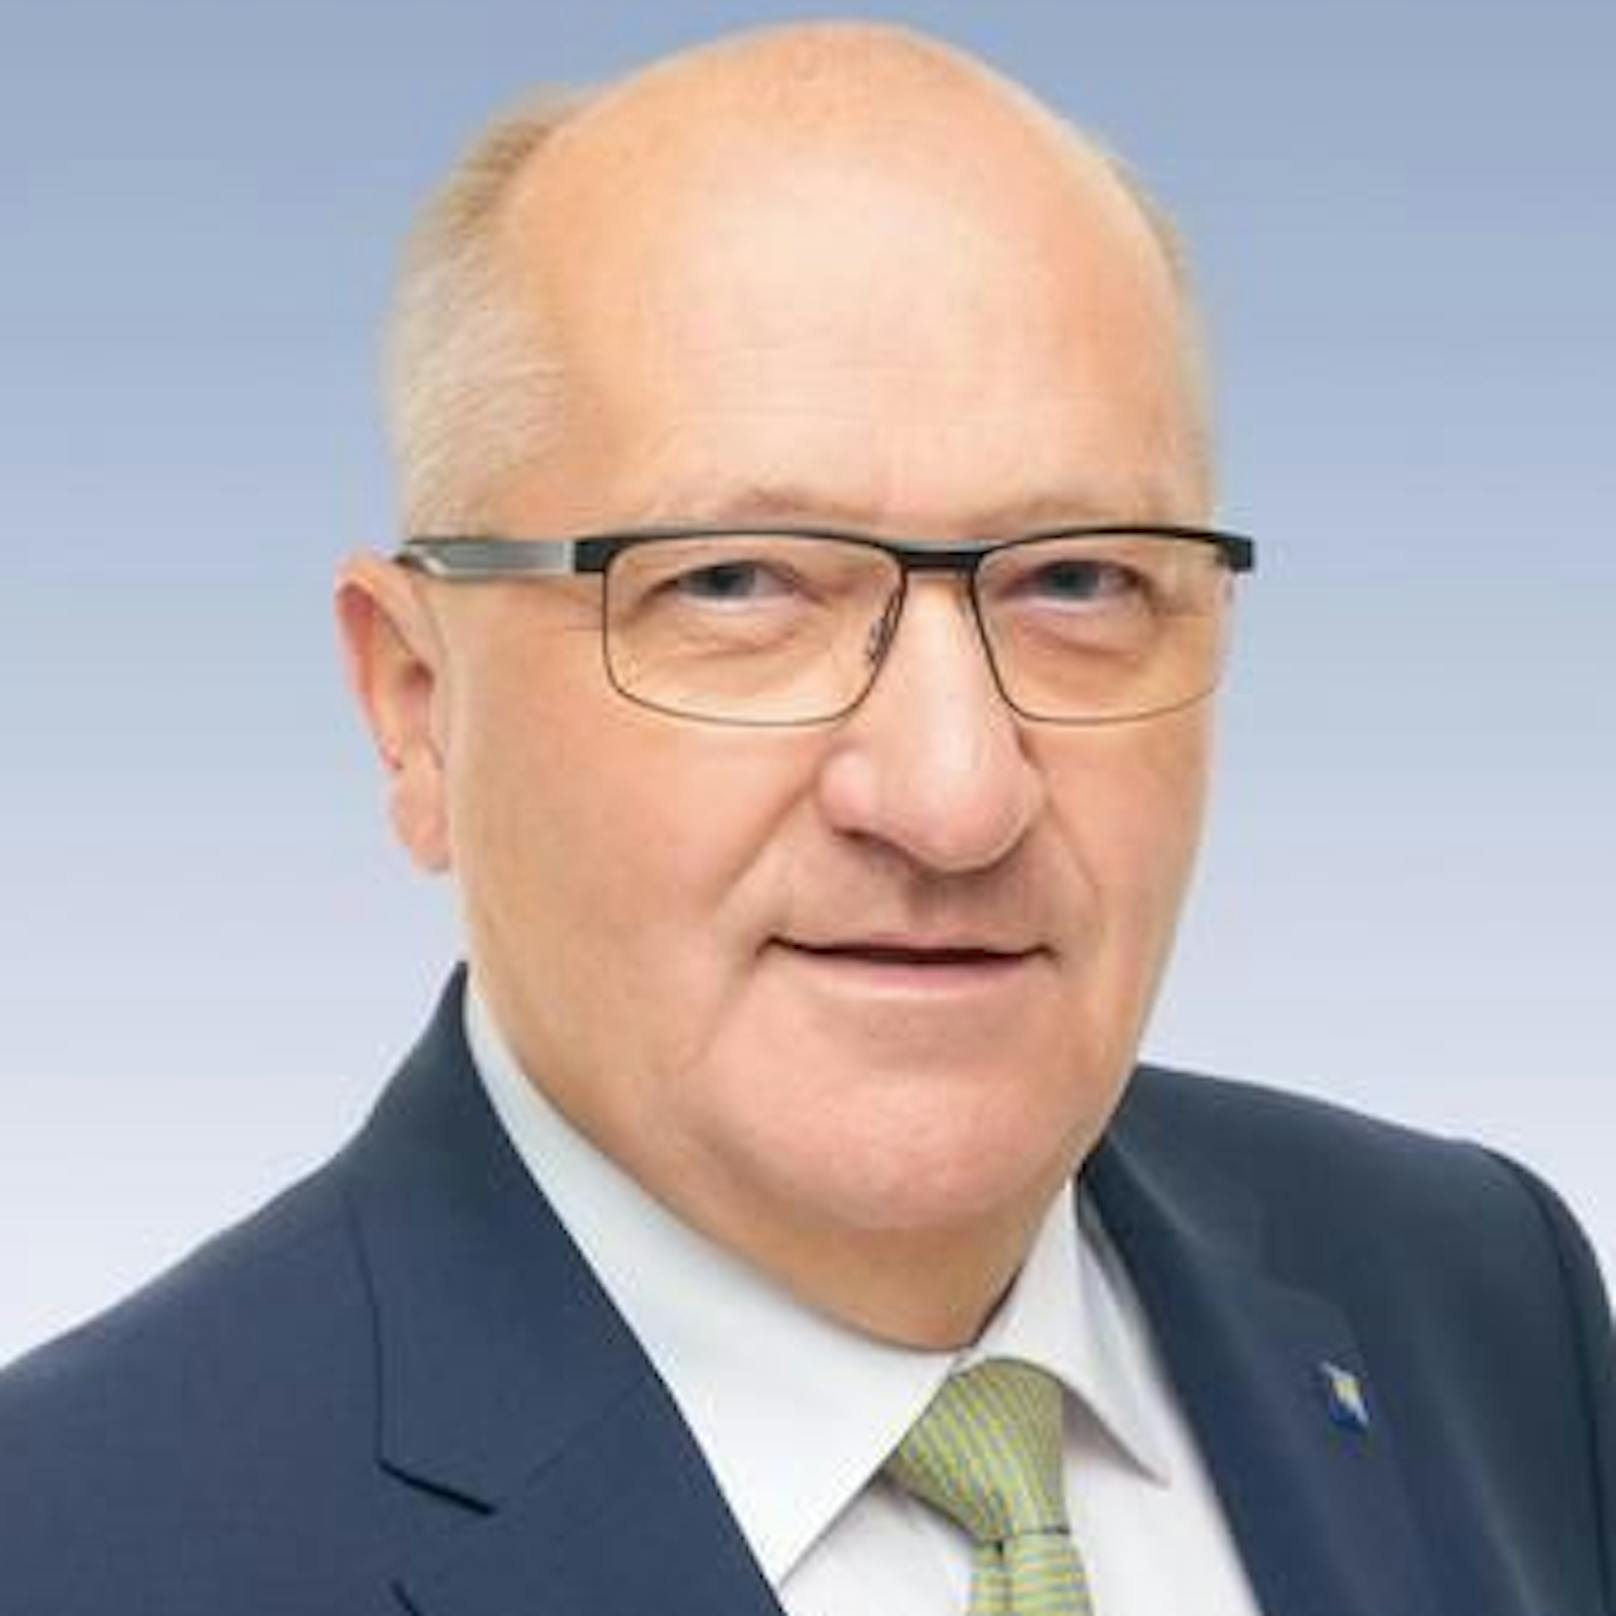 Karl Moser aus dem Yspertal folgt Gerhard Karner als Zweiter Landtagspräsident.